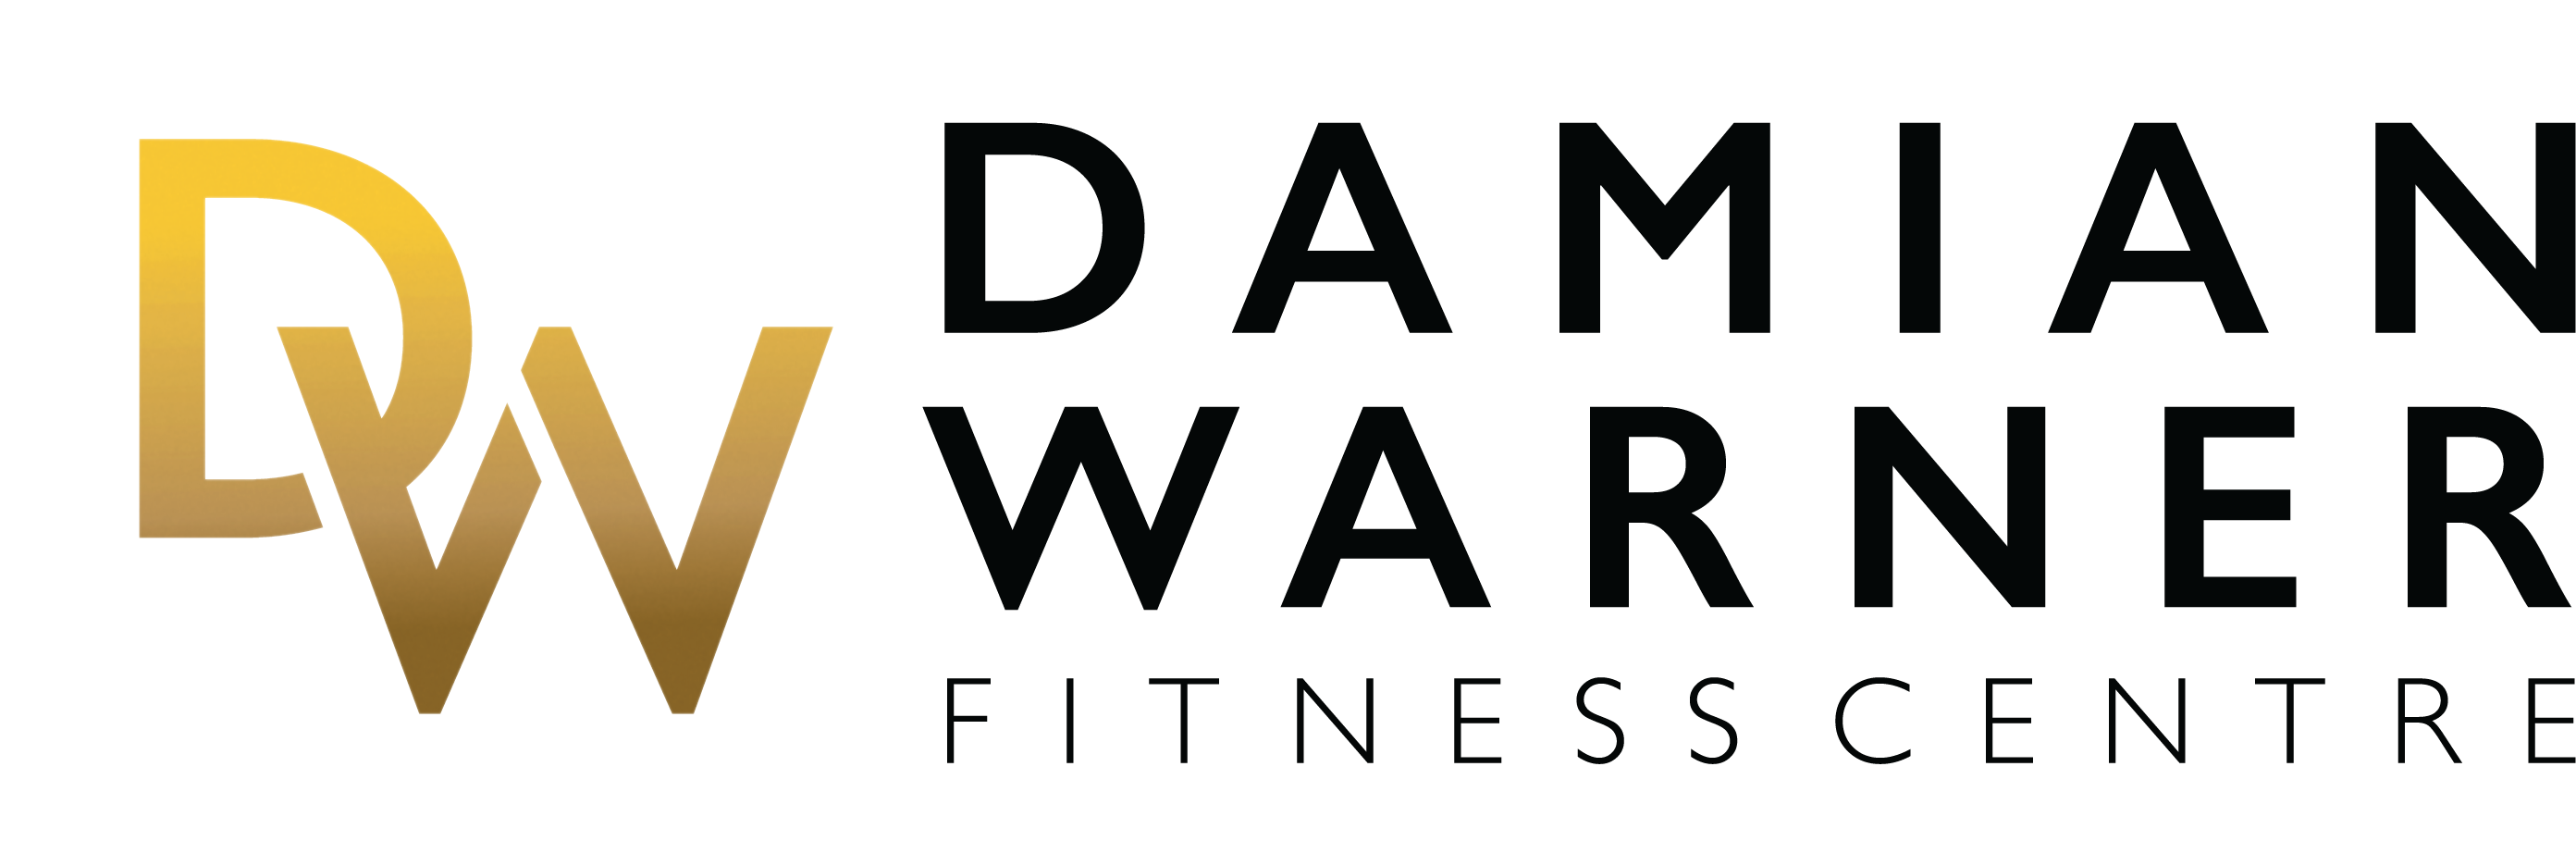 Damian Warner Fitness